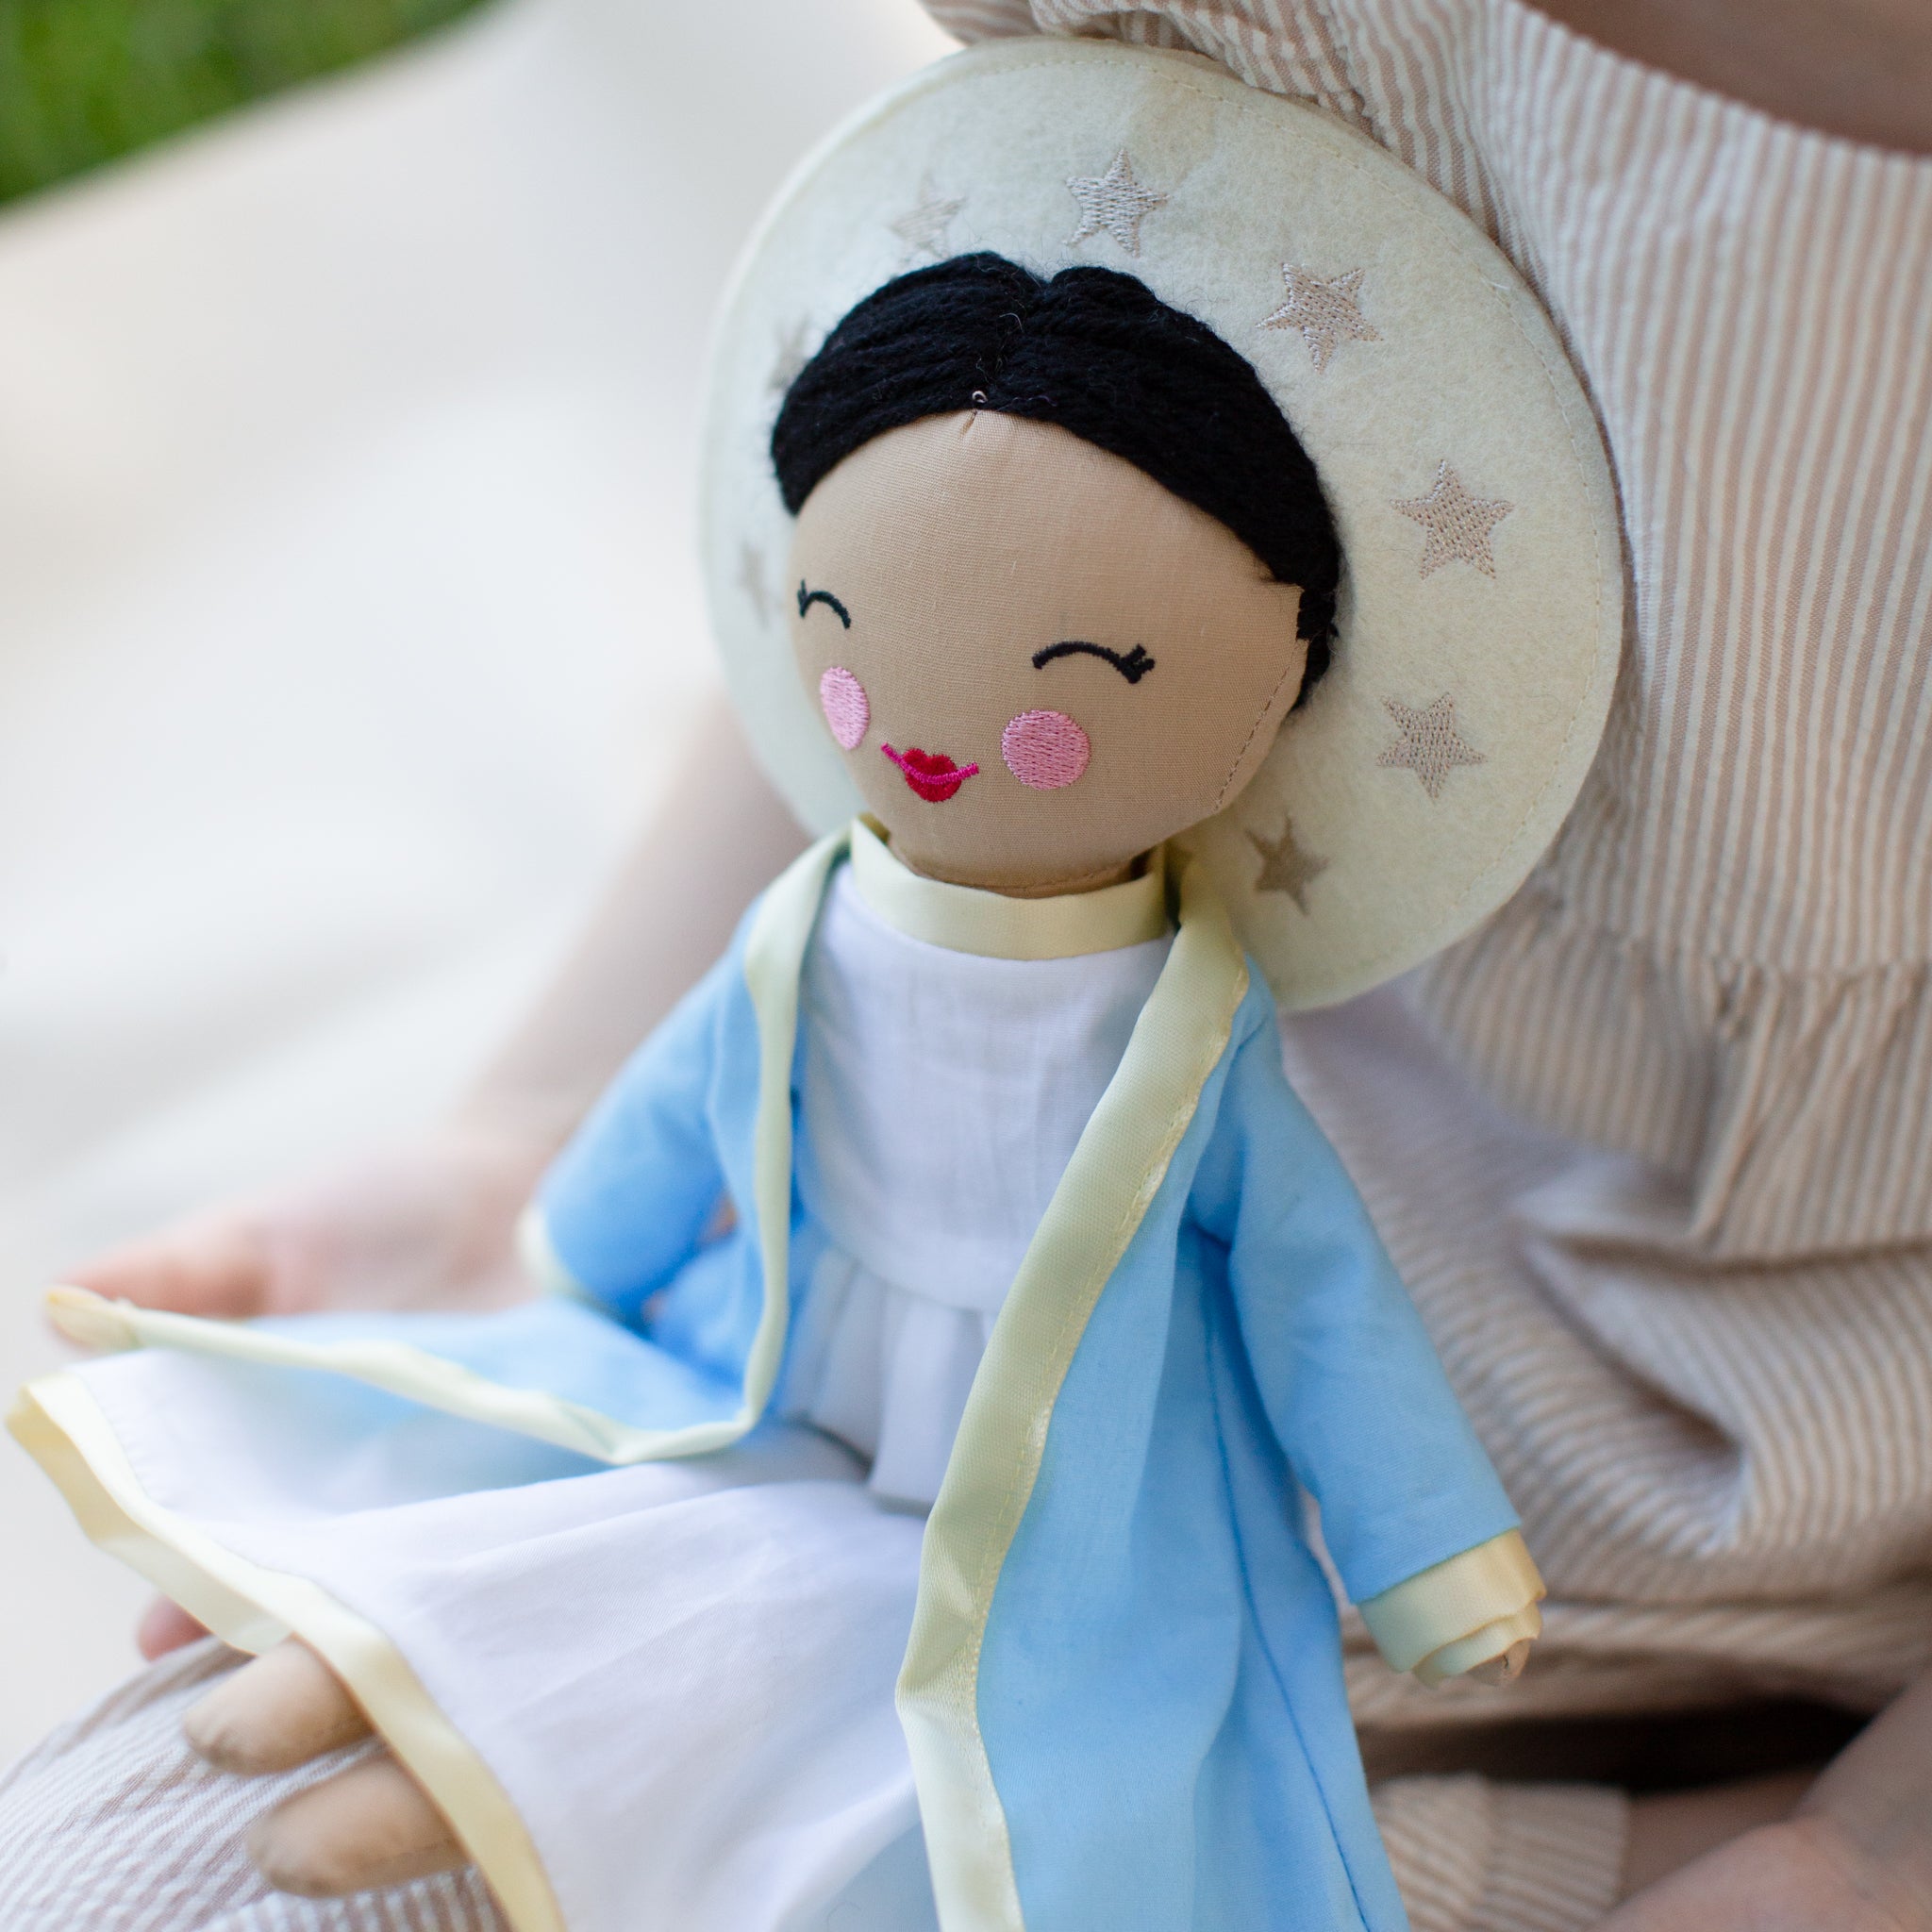 Our Lady of La Vang Rag Doll